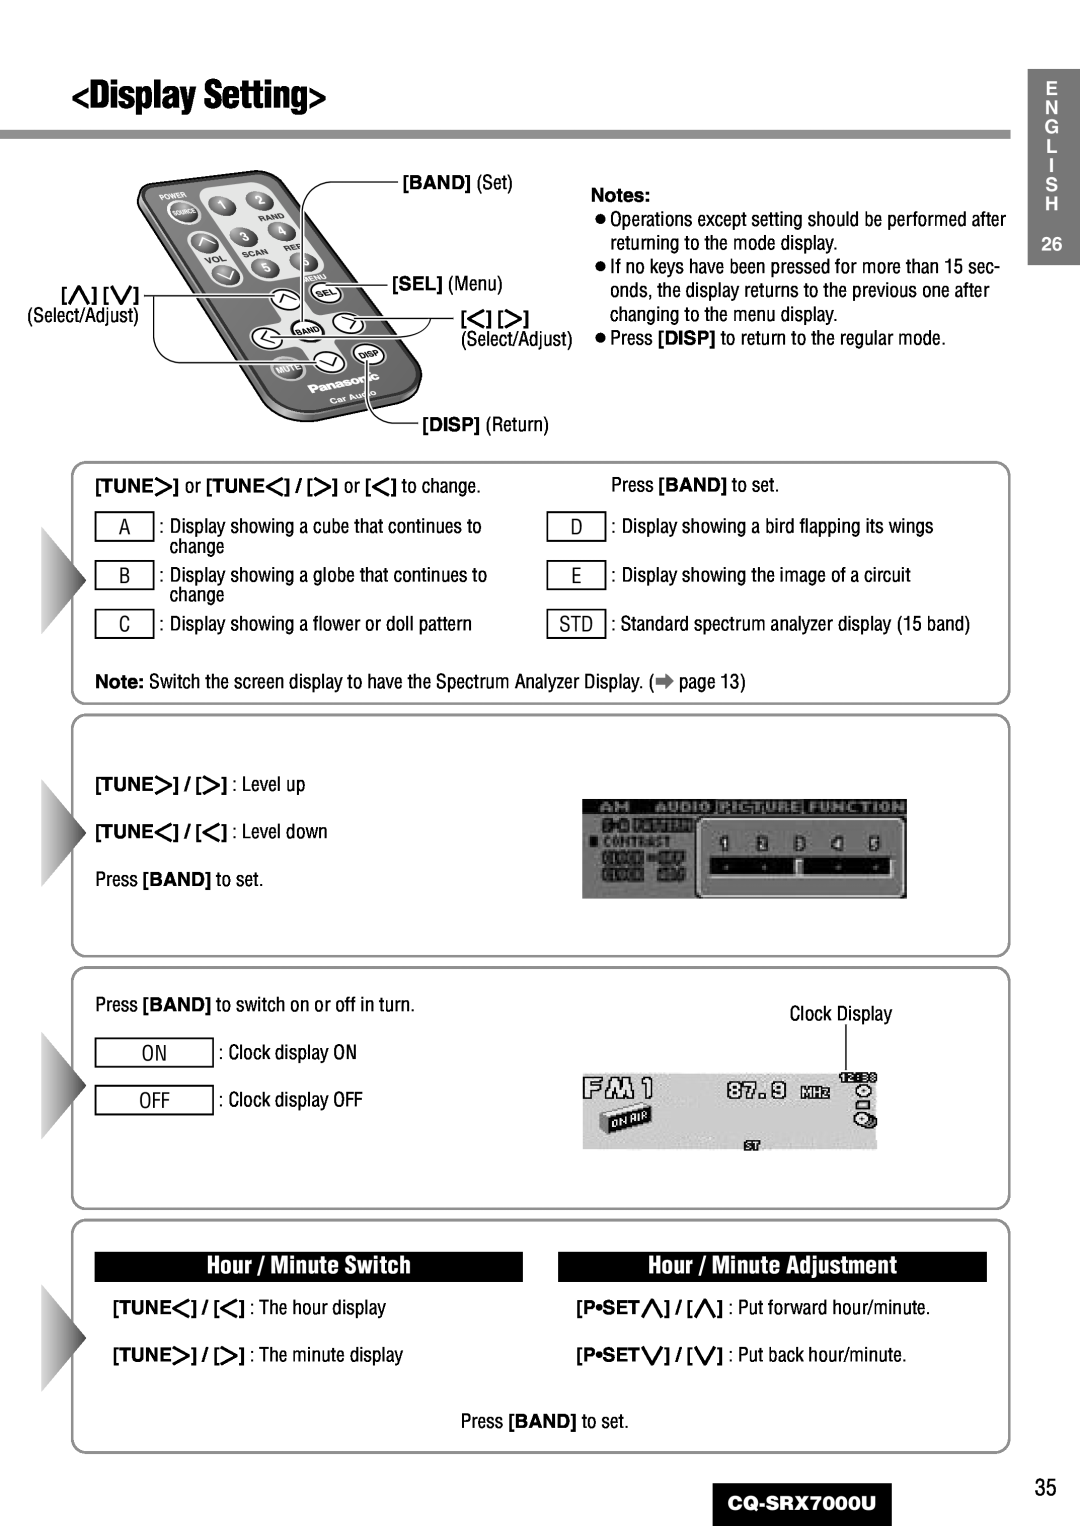 Panasonic CQ-SRX7000U manual Display Setting, Hour / Minute Switch, Hour / Minute Adjustment 